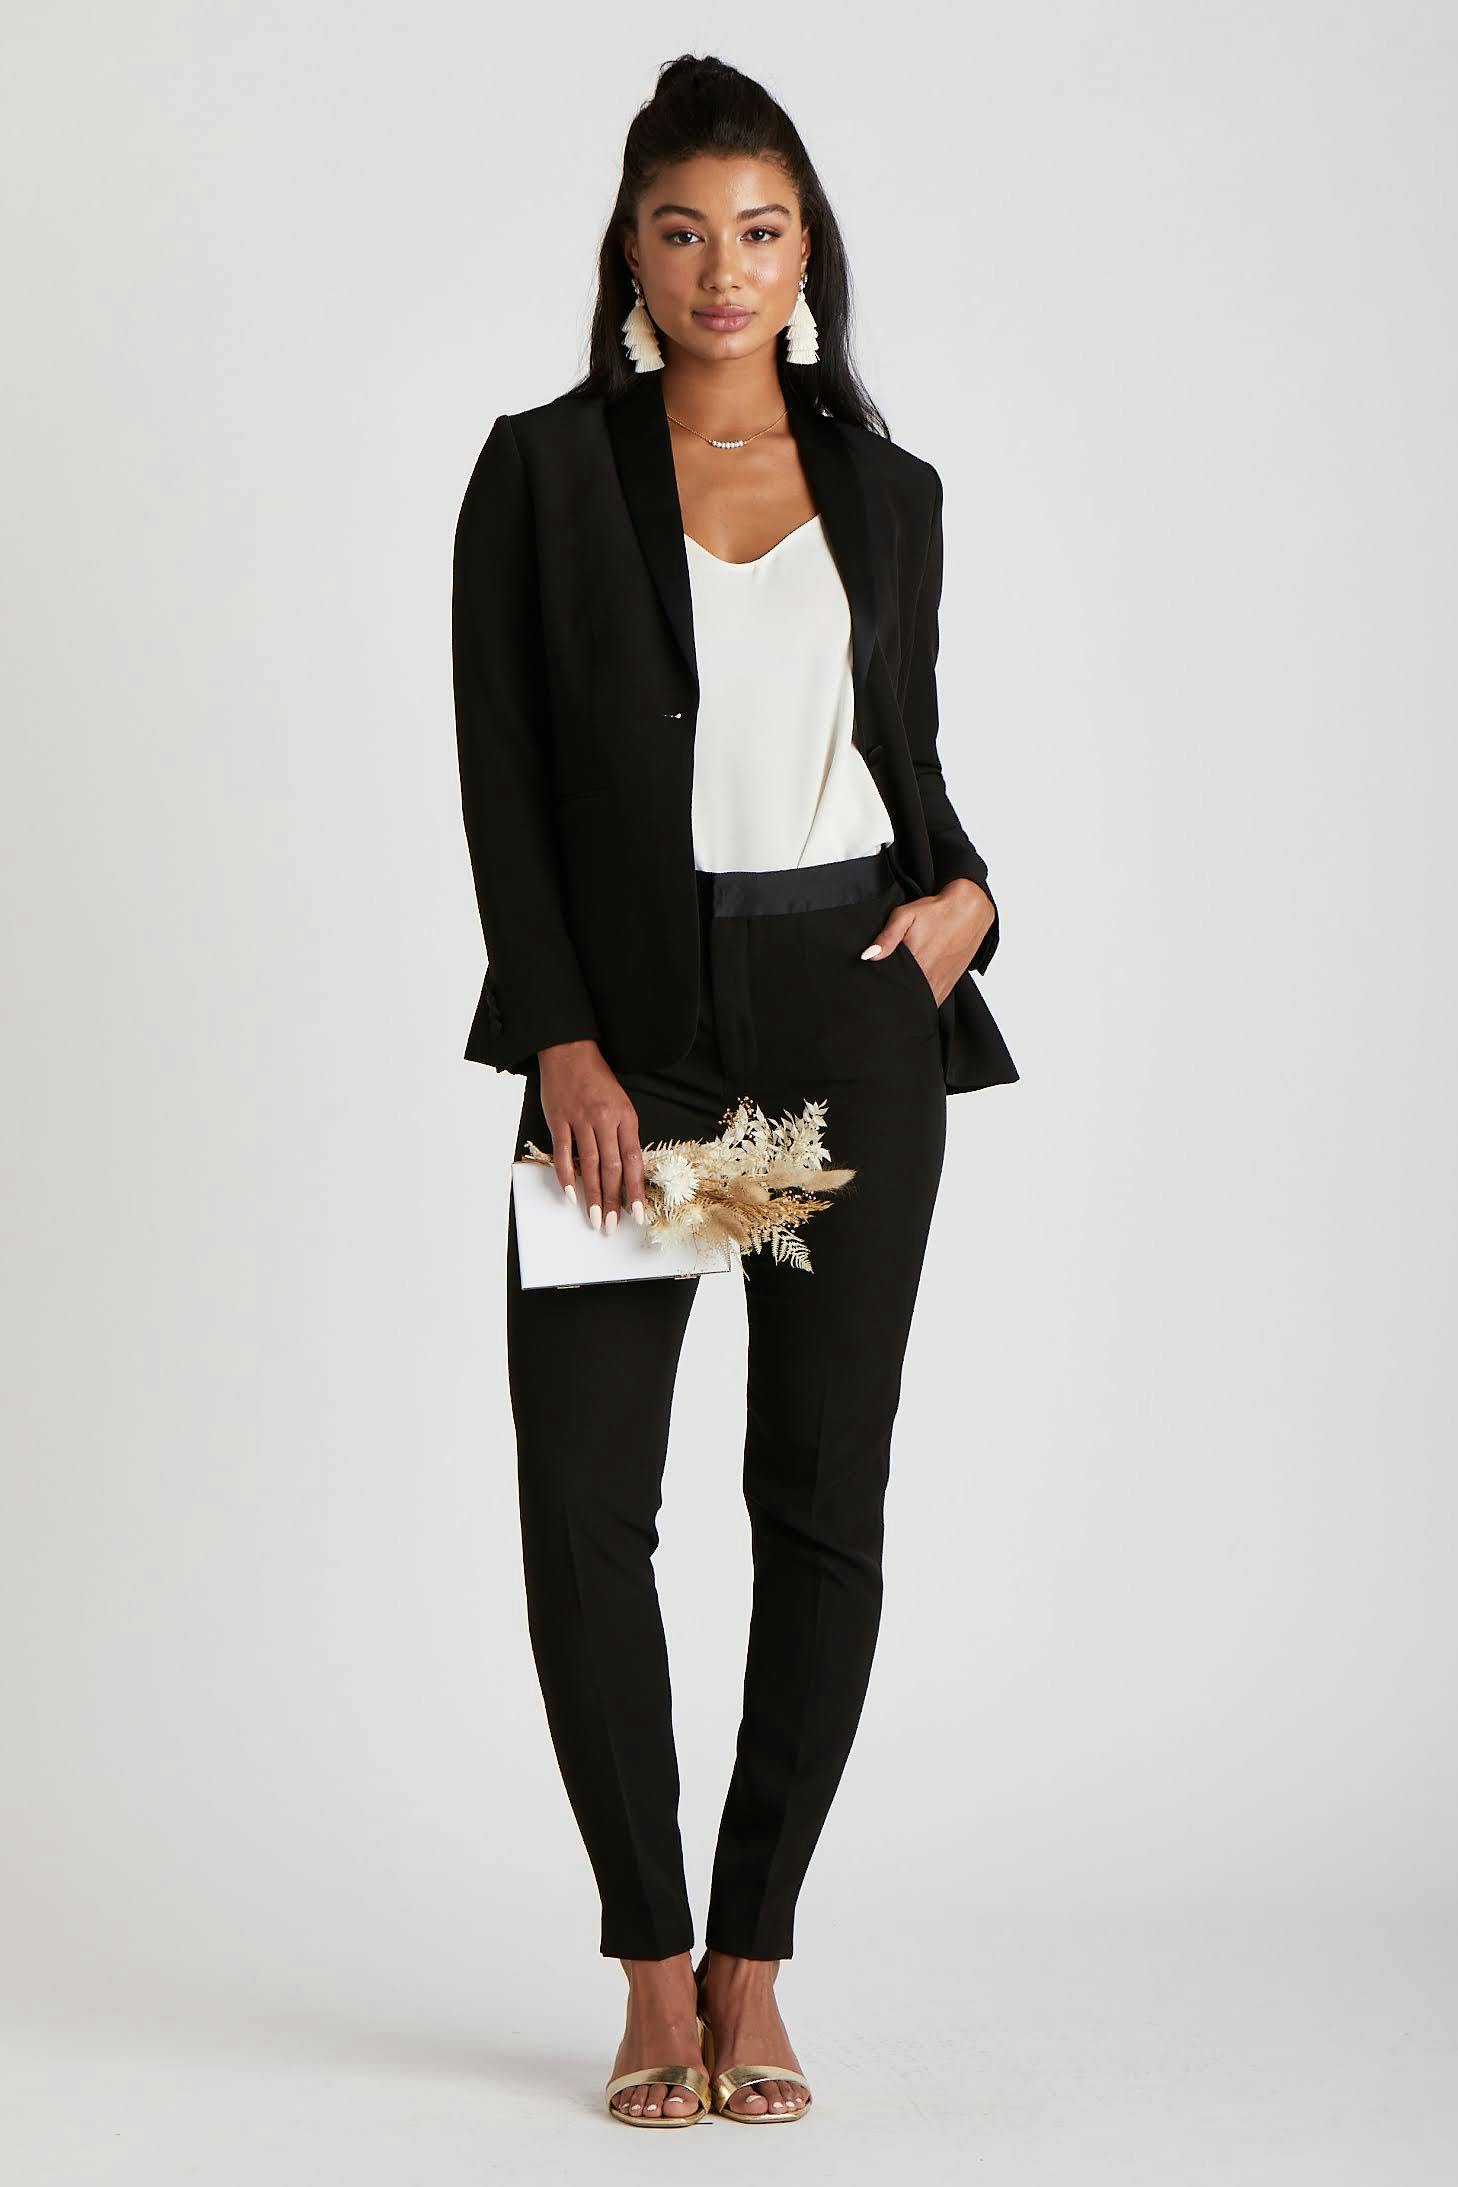 Black Dressy Pant Suits for Women Wedding Guest/women Formal Suit